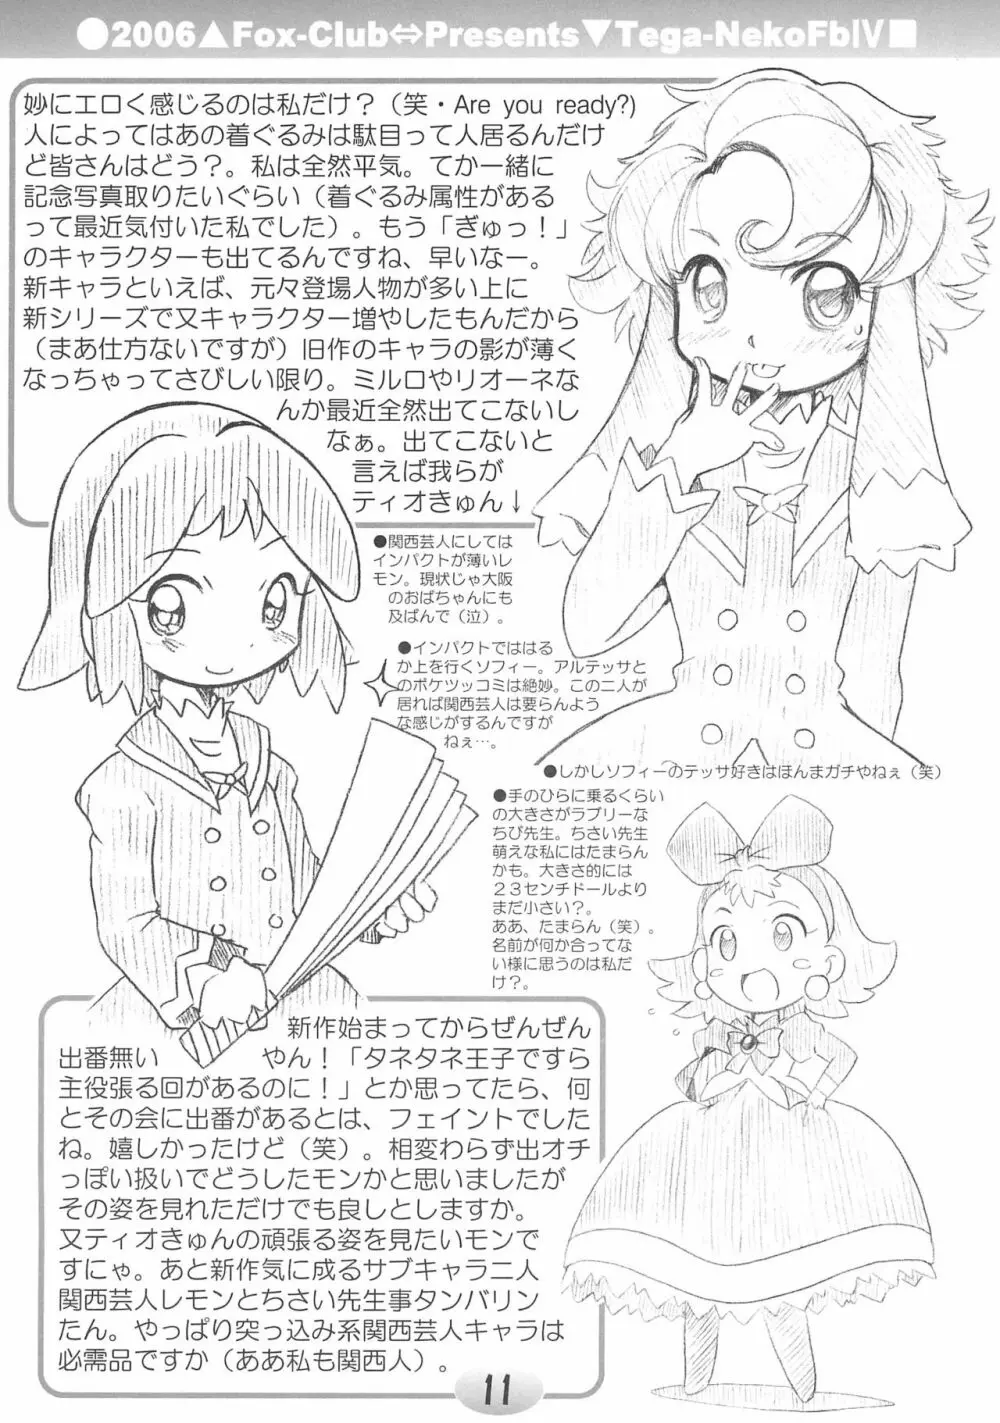 TeGa-NeKo Fb IV ふたご姫 2ぷらす Page.11